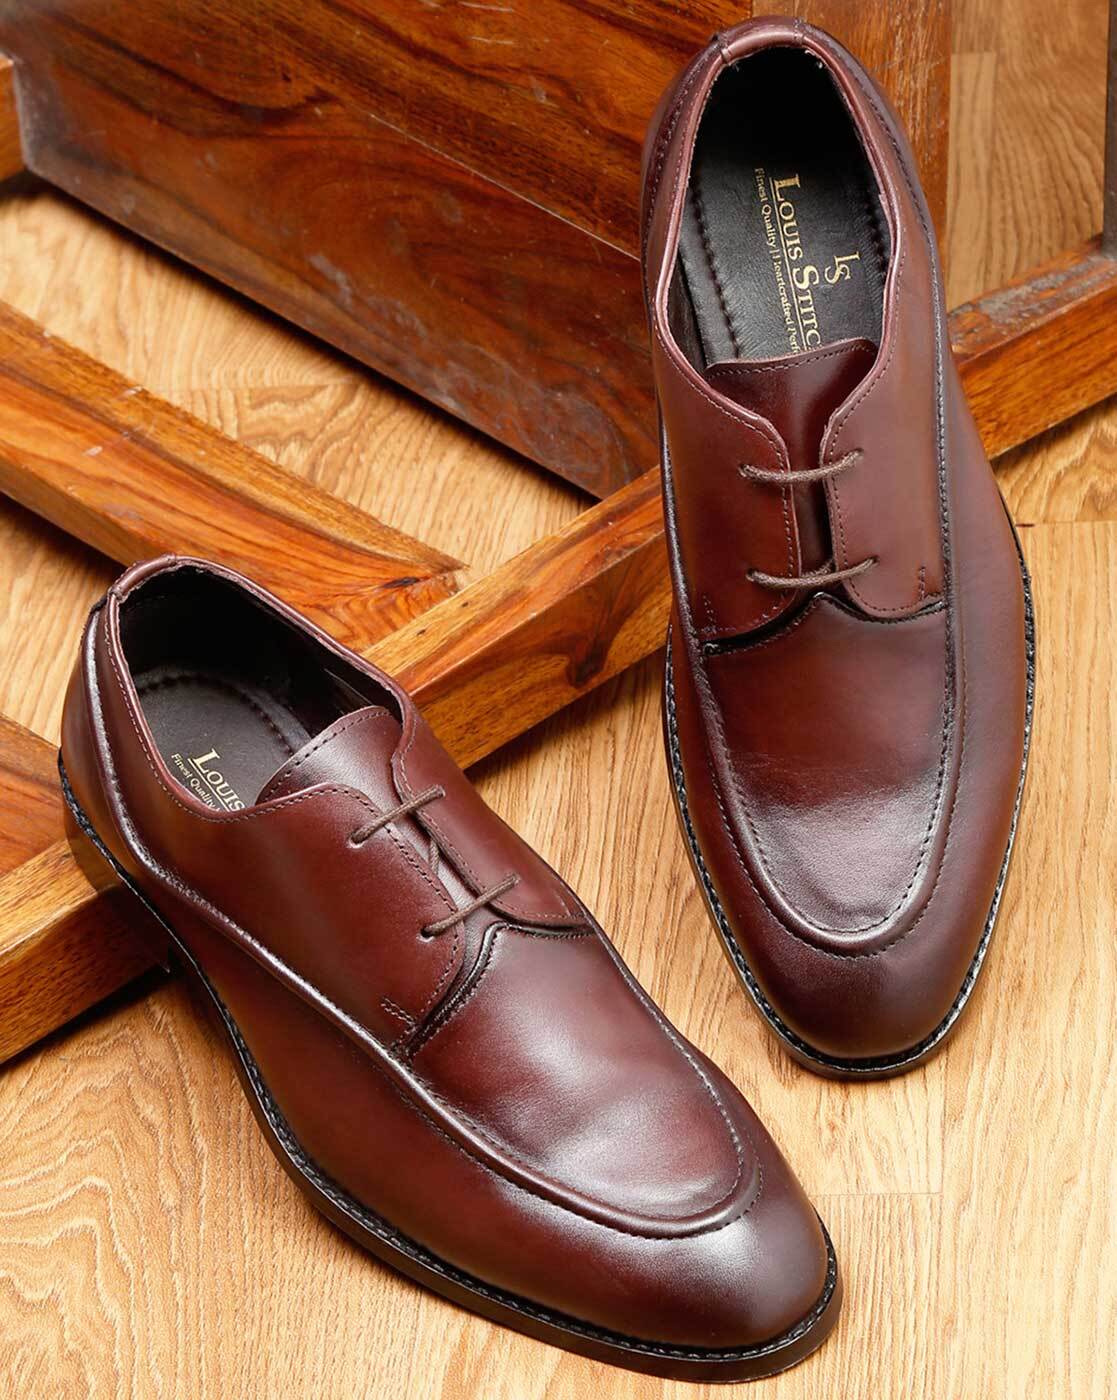 Aramish Men's Genuine Leather Formal Slipon Moccasin Shoes (UK 5 to 10 UK)  – Shop Men's Shoes at Aramish Shoes – Great Deals on Stylish Footwear